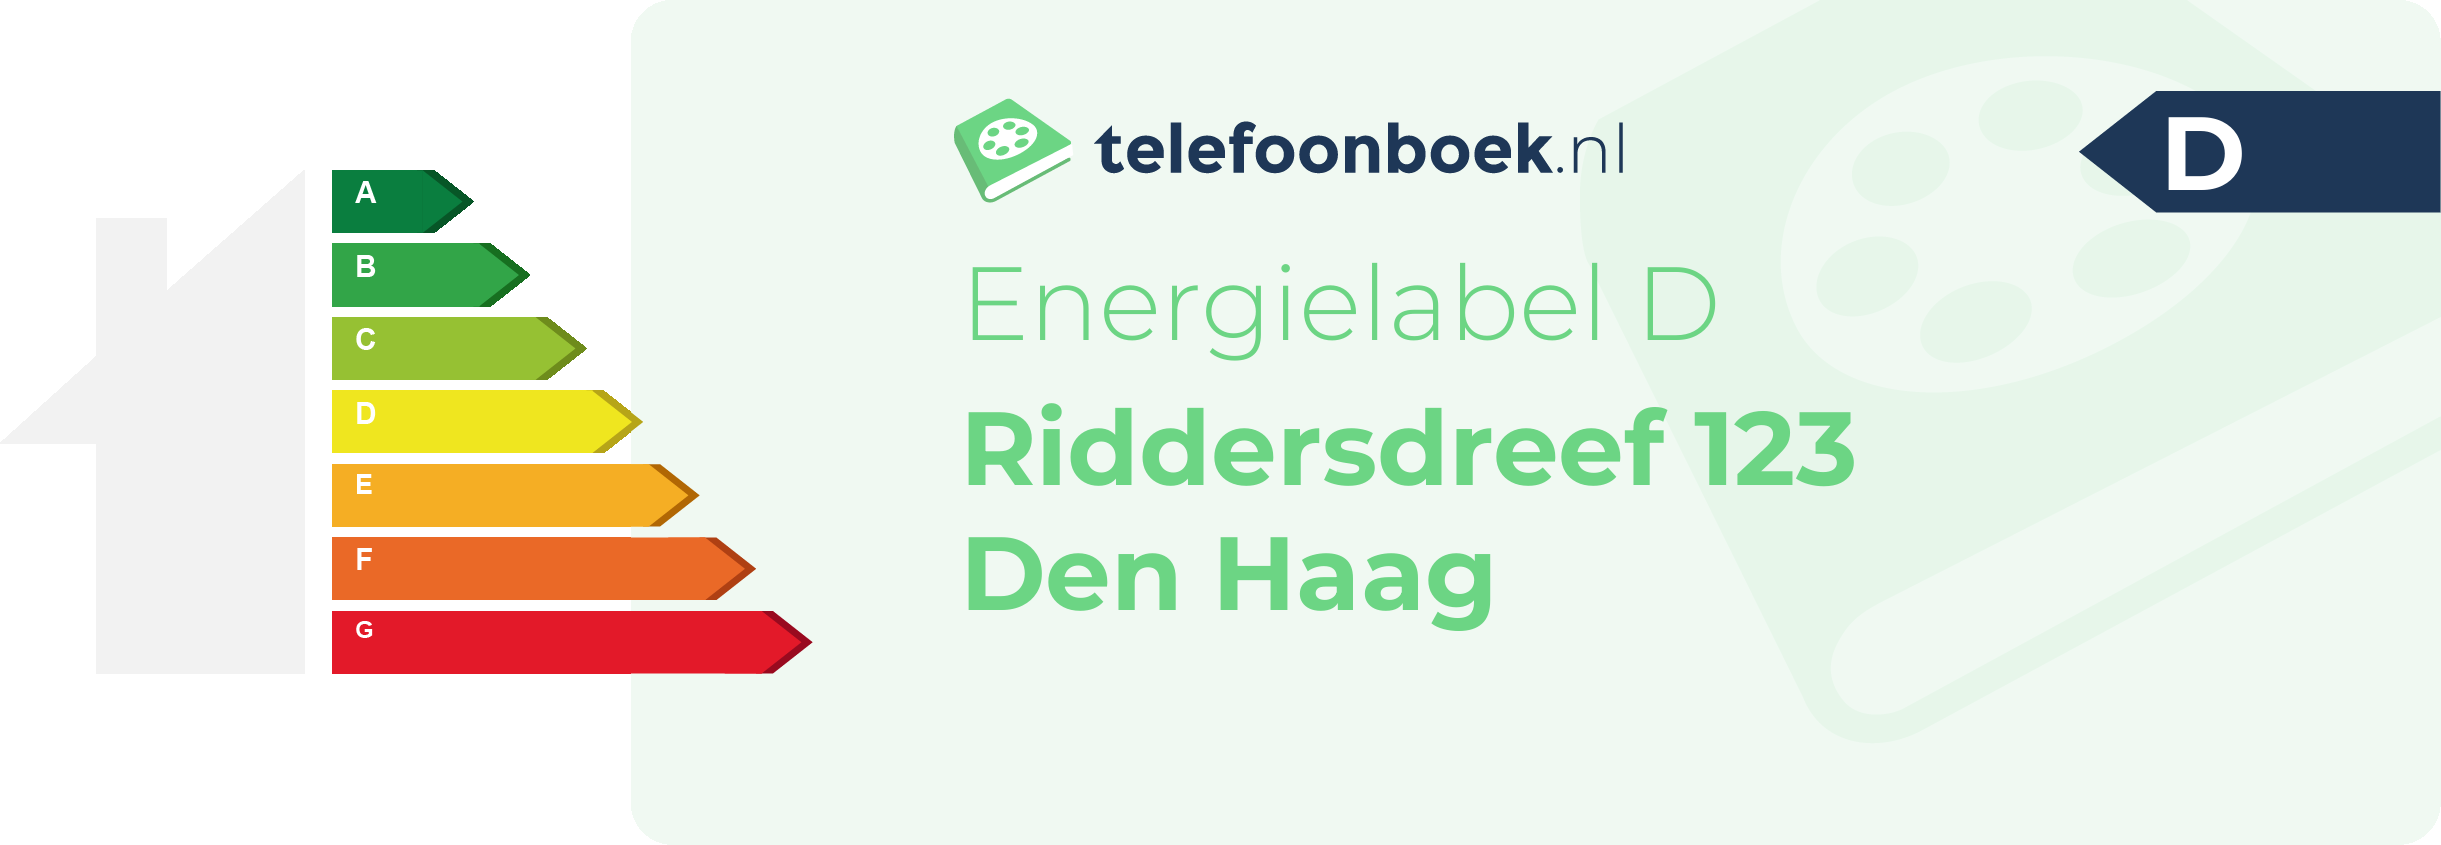 Energielabel Riddersdreef 123 Den Haag